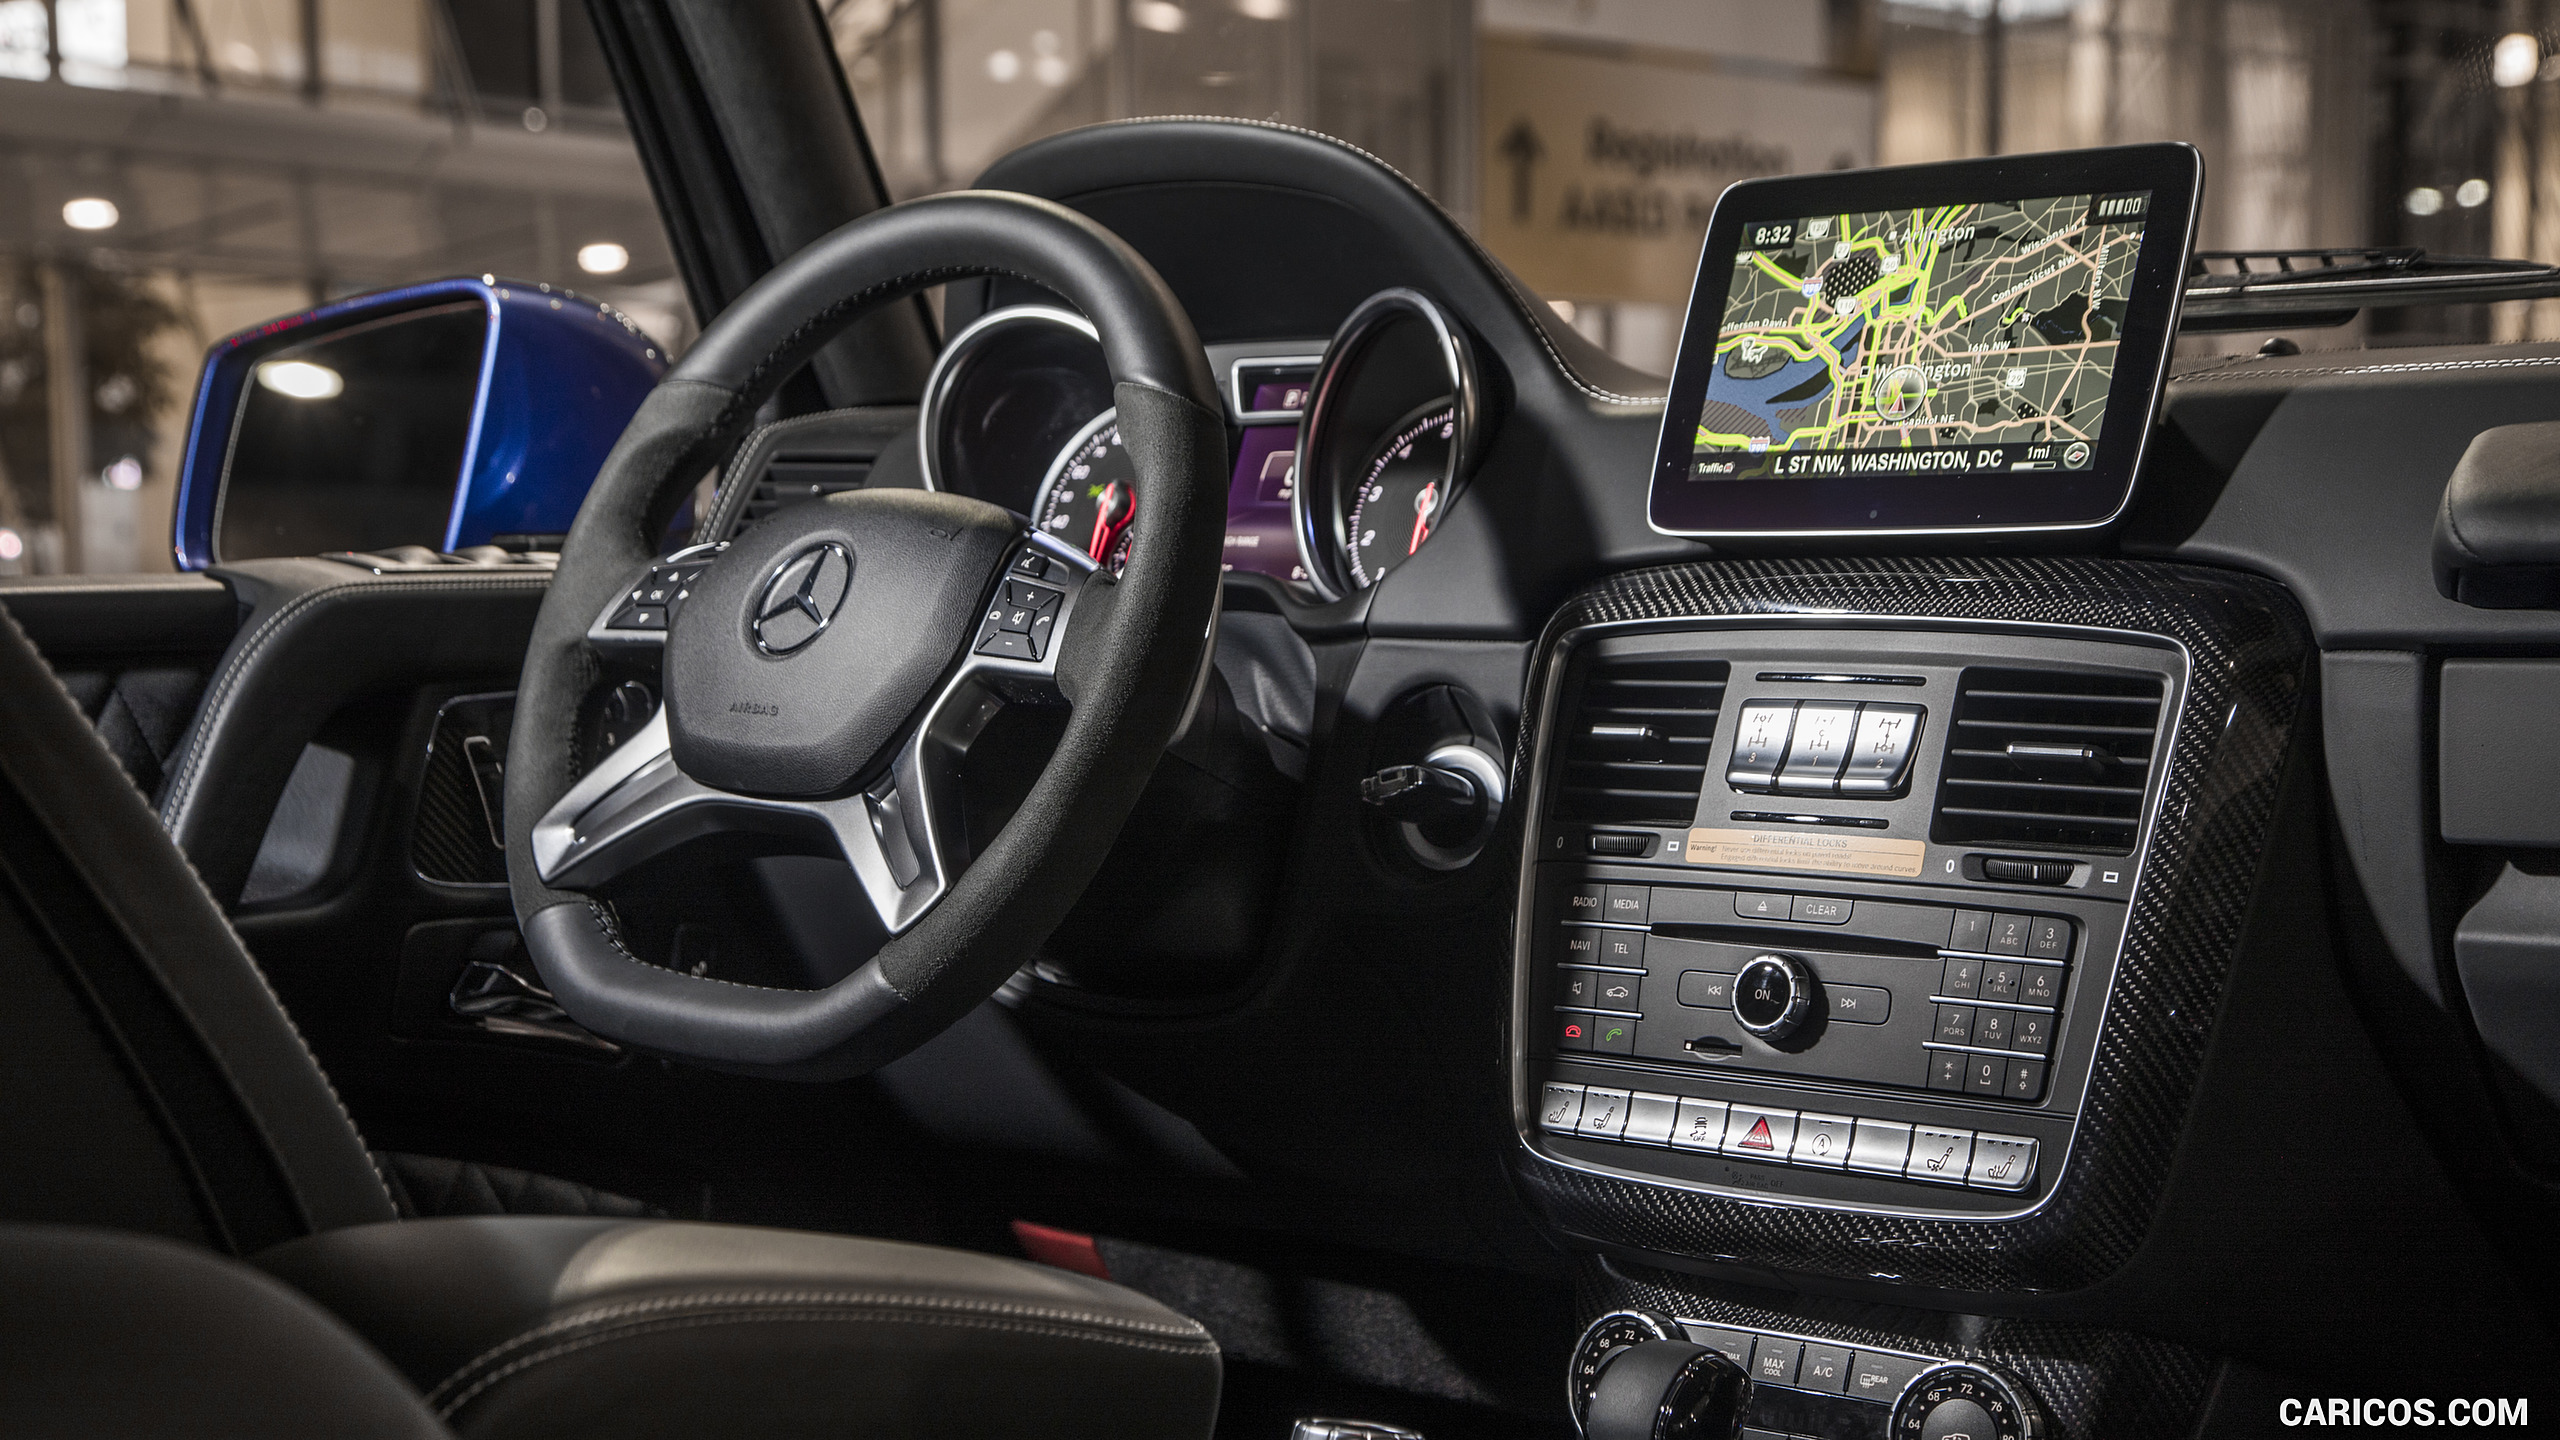 2017 Mercedes-Benz G550 4x4² (US-Spec) - Interior, #37 of 45